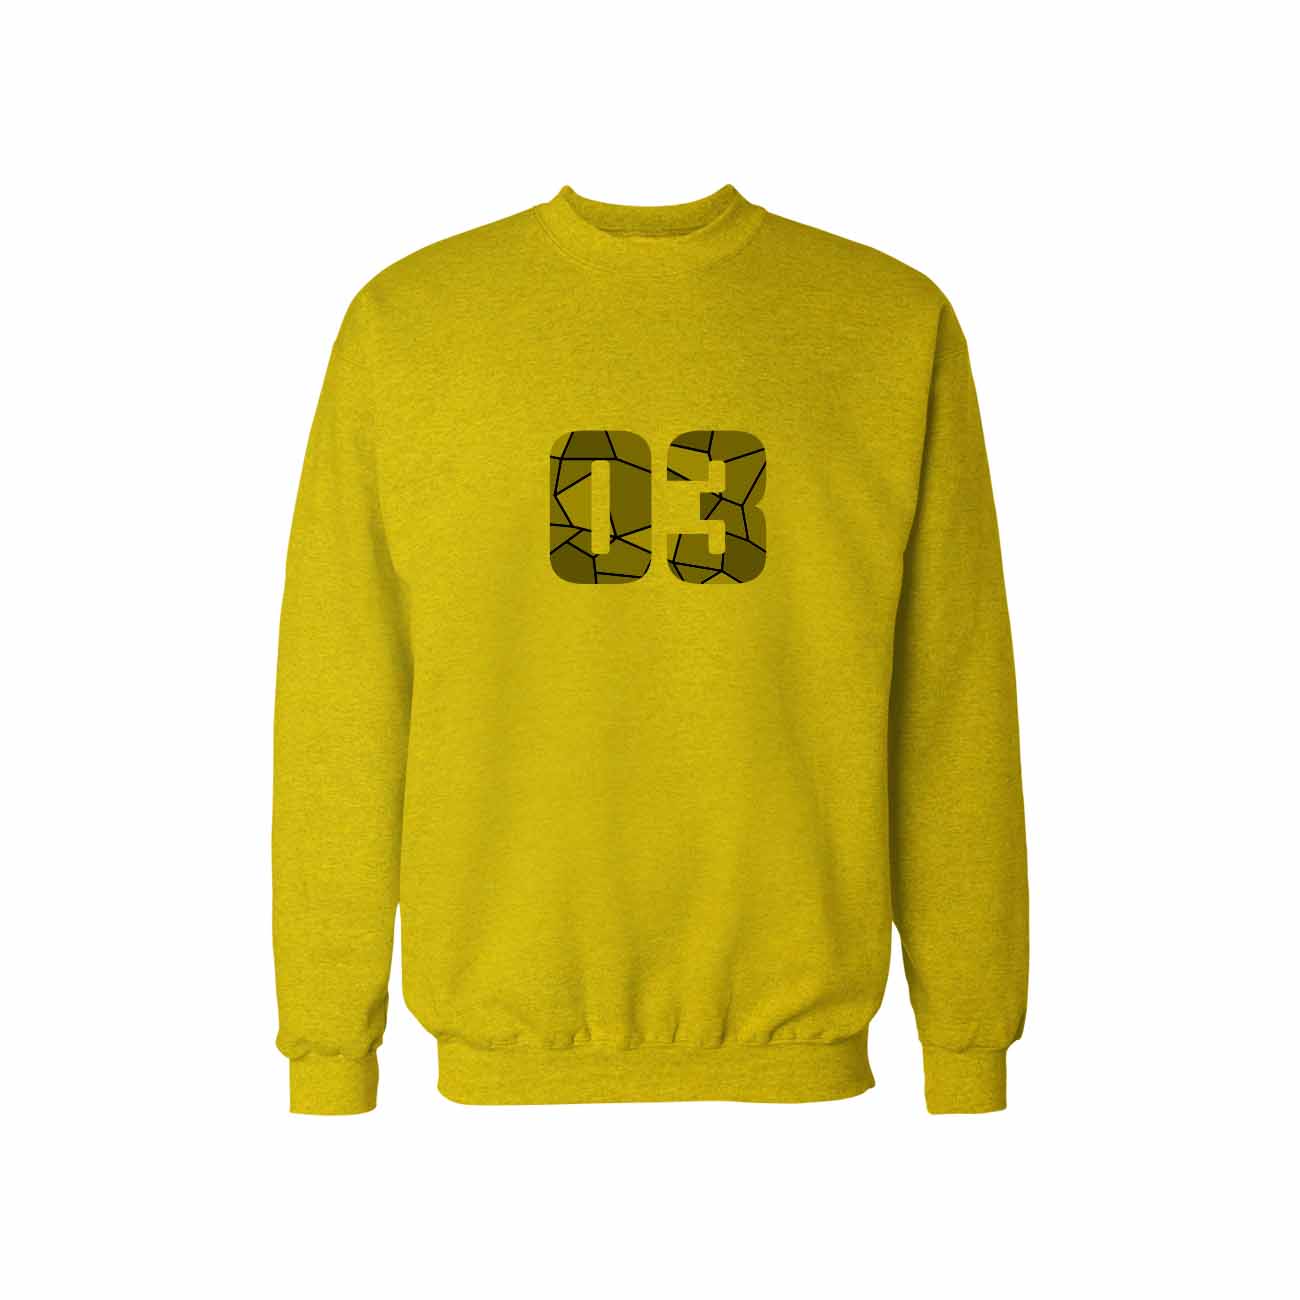 03 Number Unisex  Sweatshirt